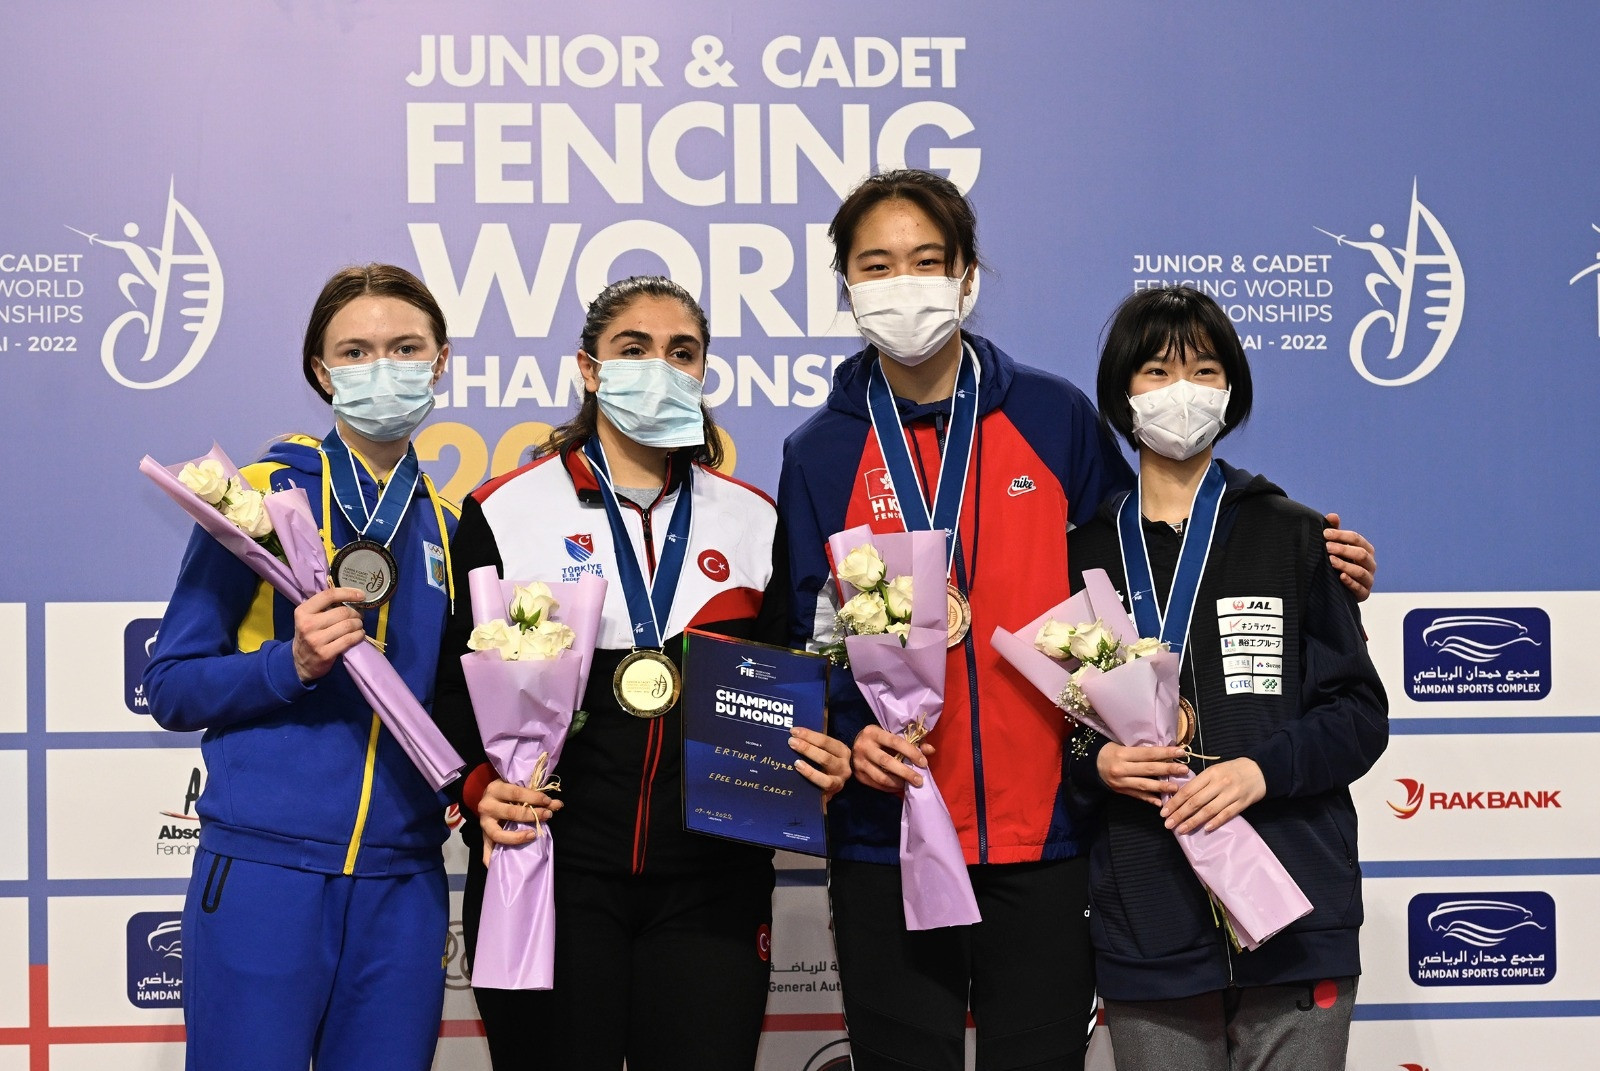 Aleyna Ertürk won the women's cadet épée gold at the Junior and Cadet Fencing World Championships ©FIE